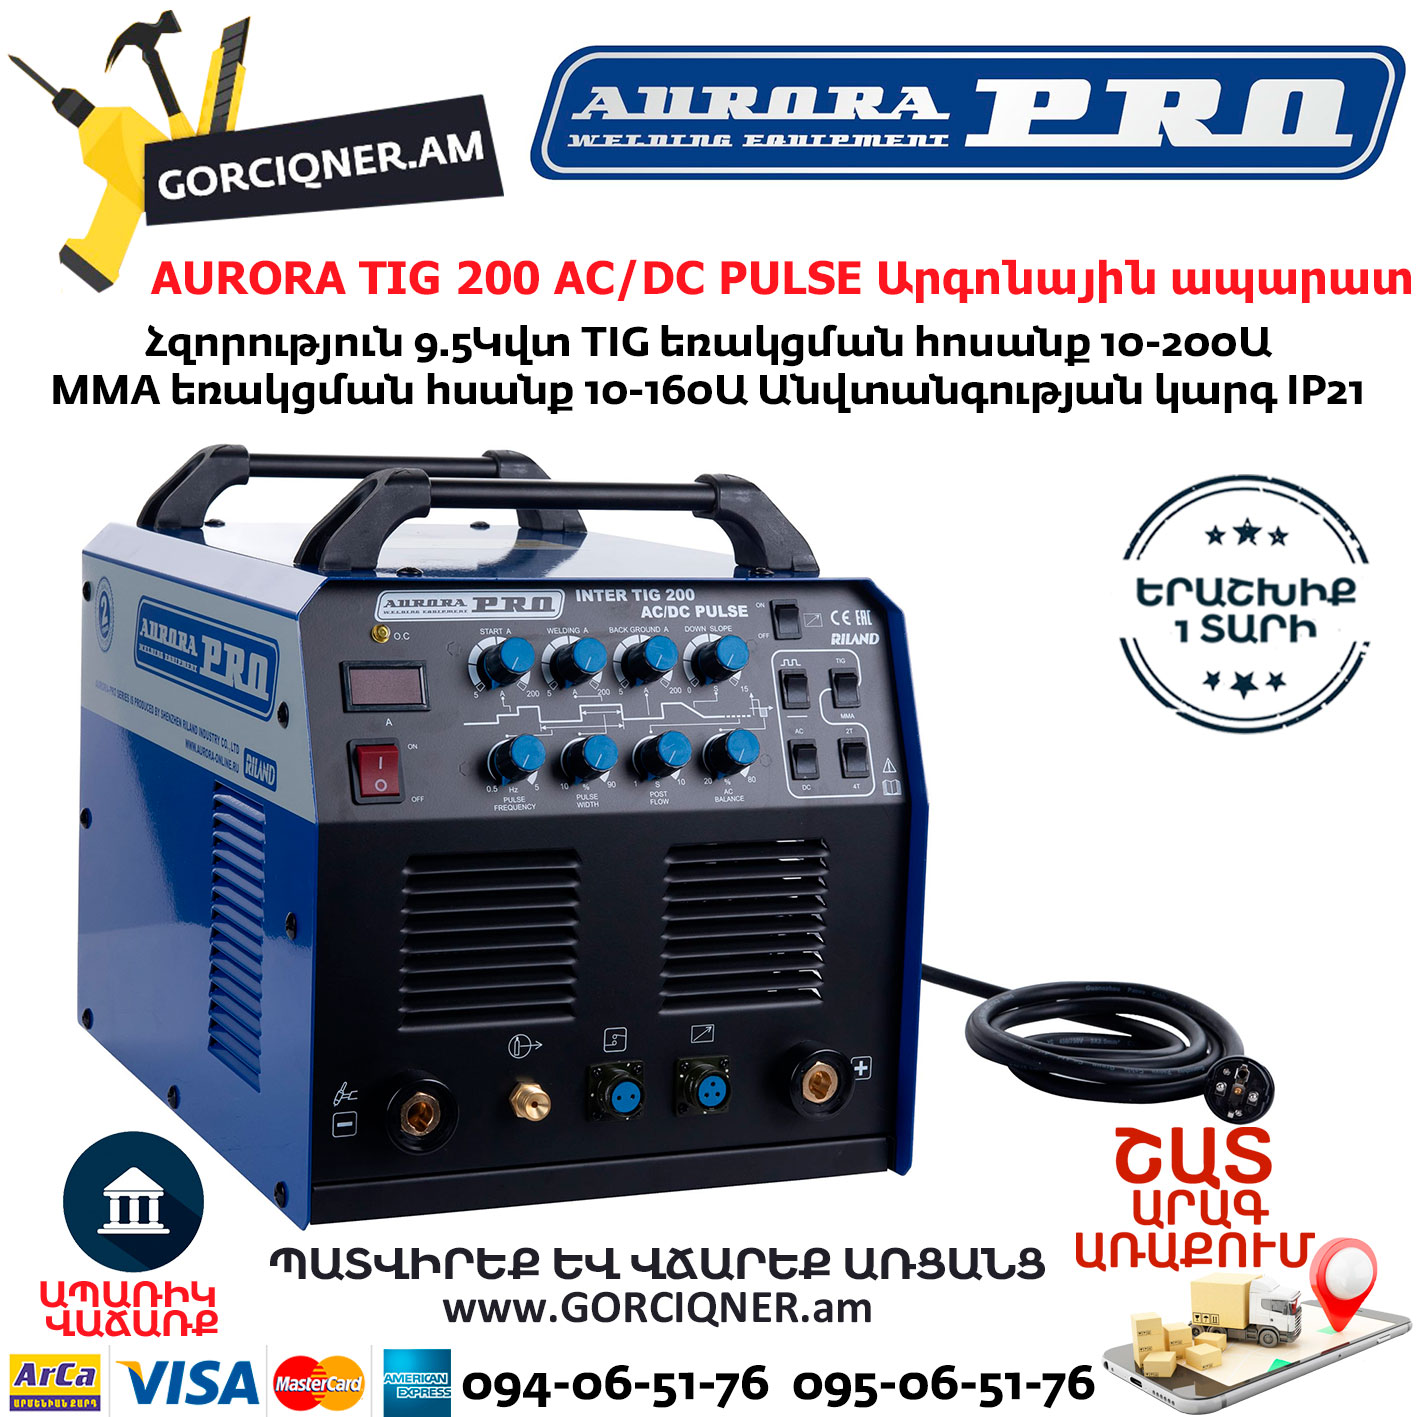 Aurora pro inter tig pulse. Aurora Pro Inter Tig 200 AC/DC Pulse. Inter Tig 200 AC DC.